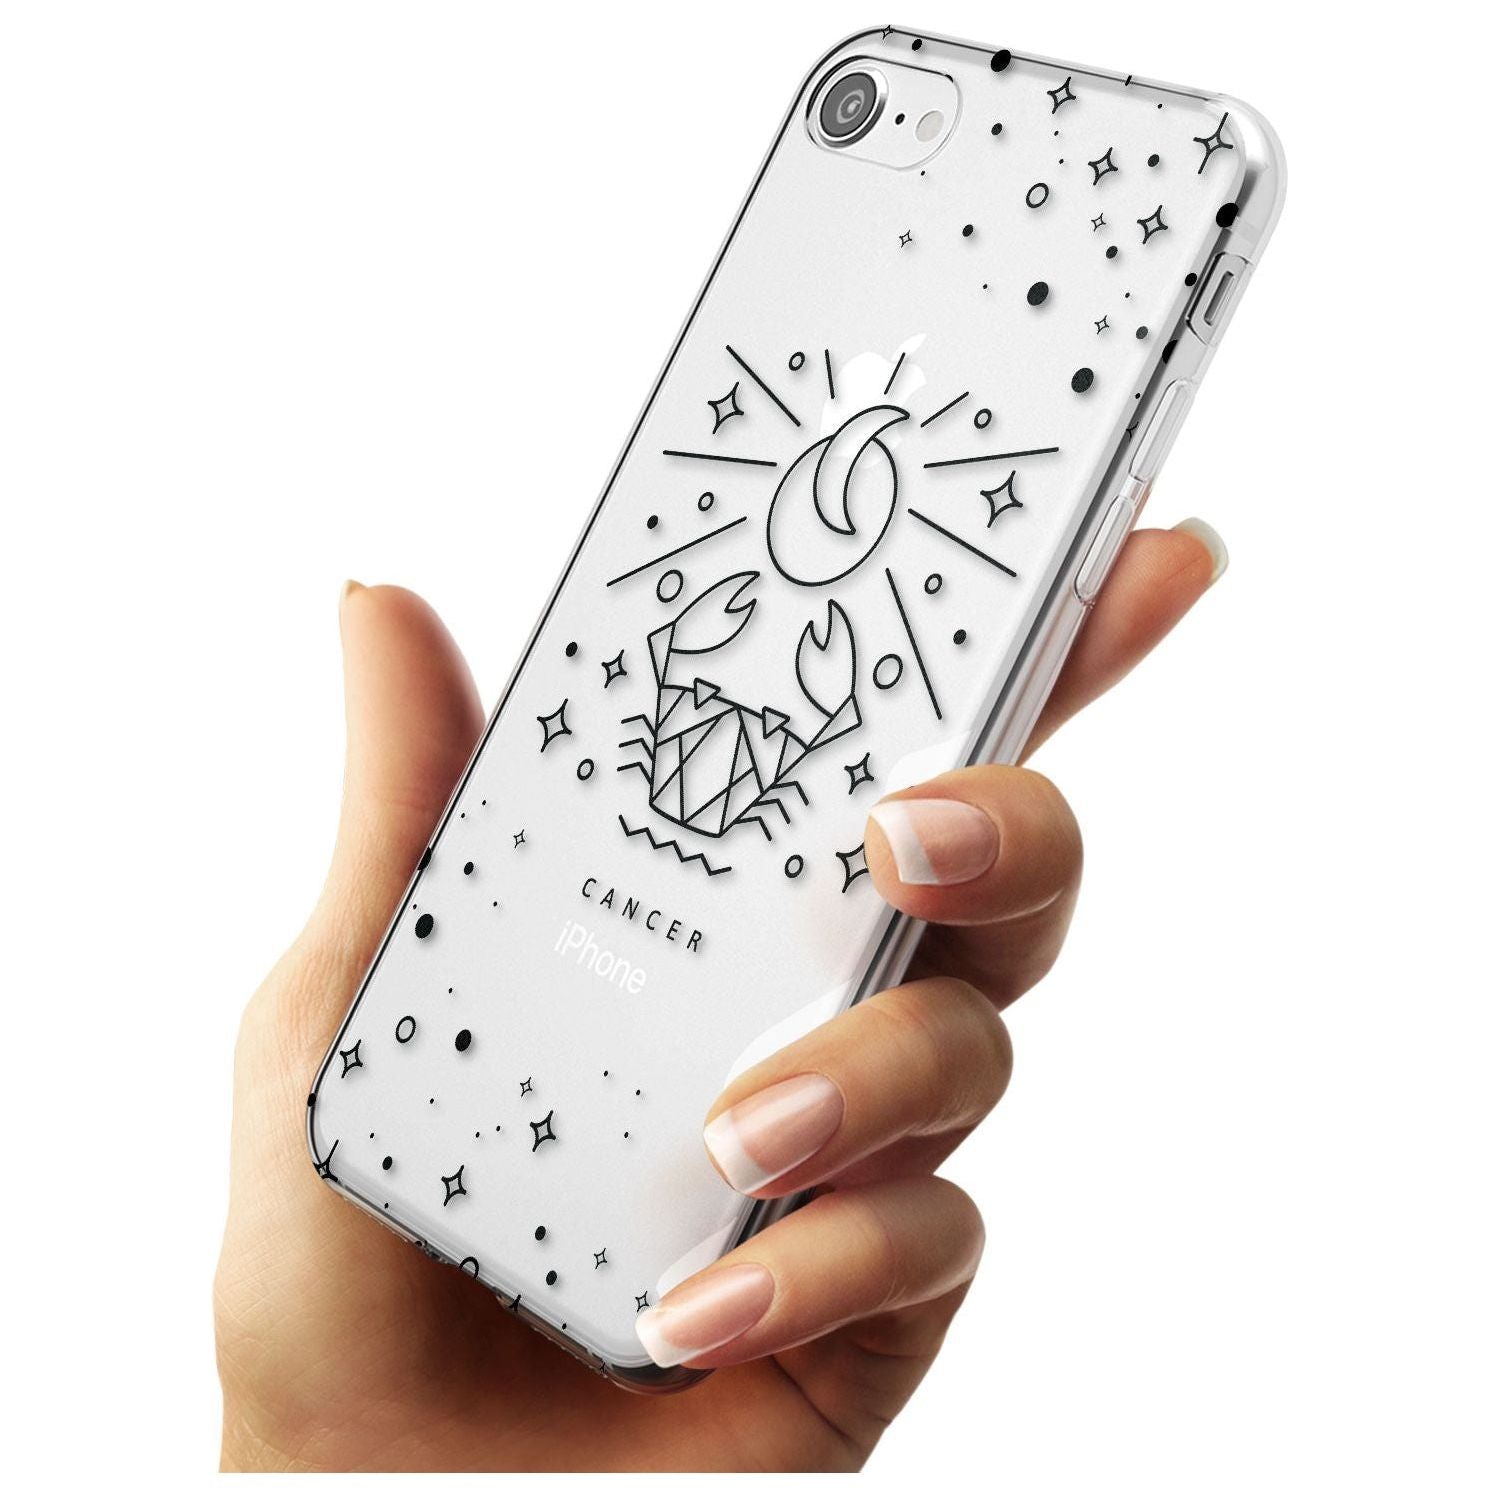 Cancer Emblem - Transparent Design Slim TPU Phone Case for iPhone SE 8 7 Plus